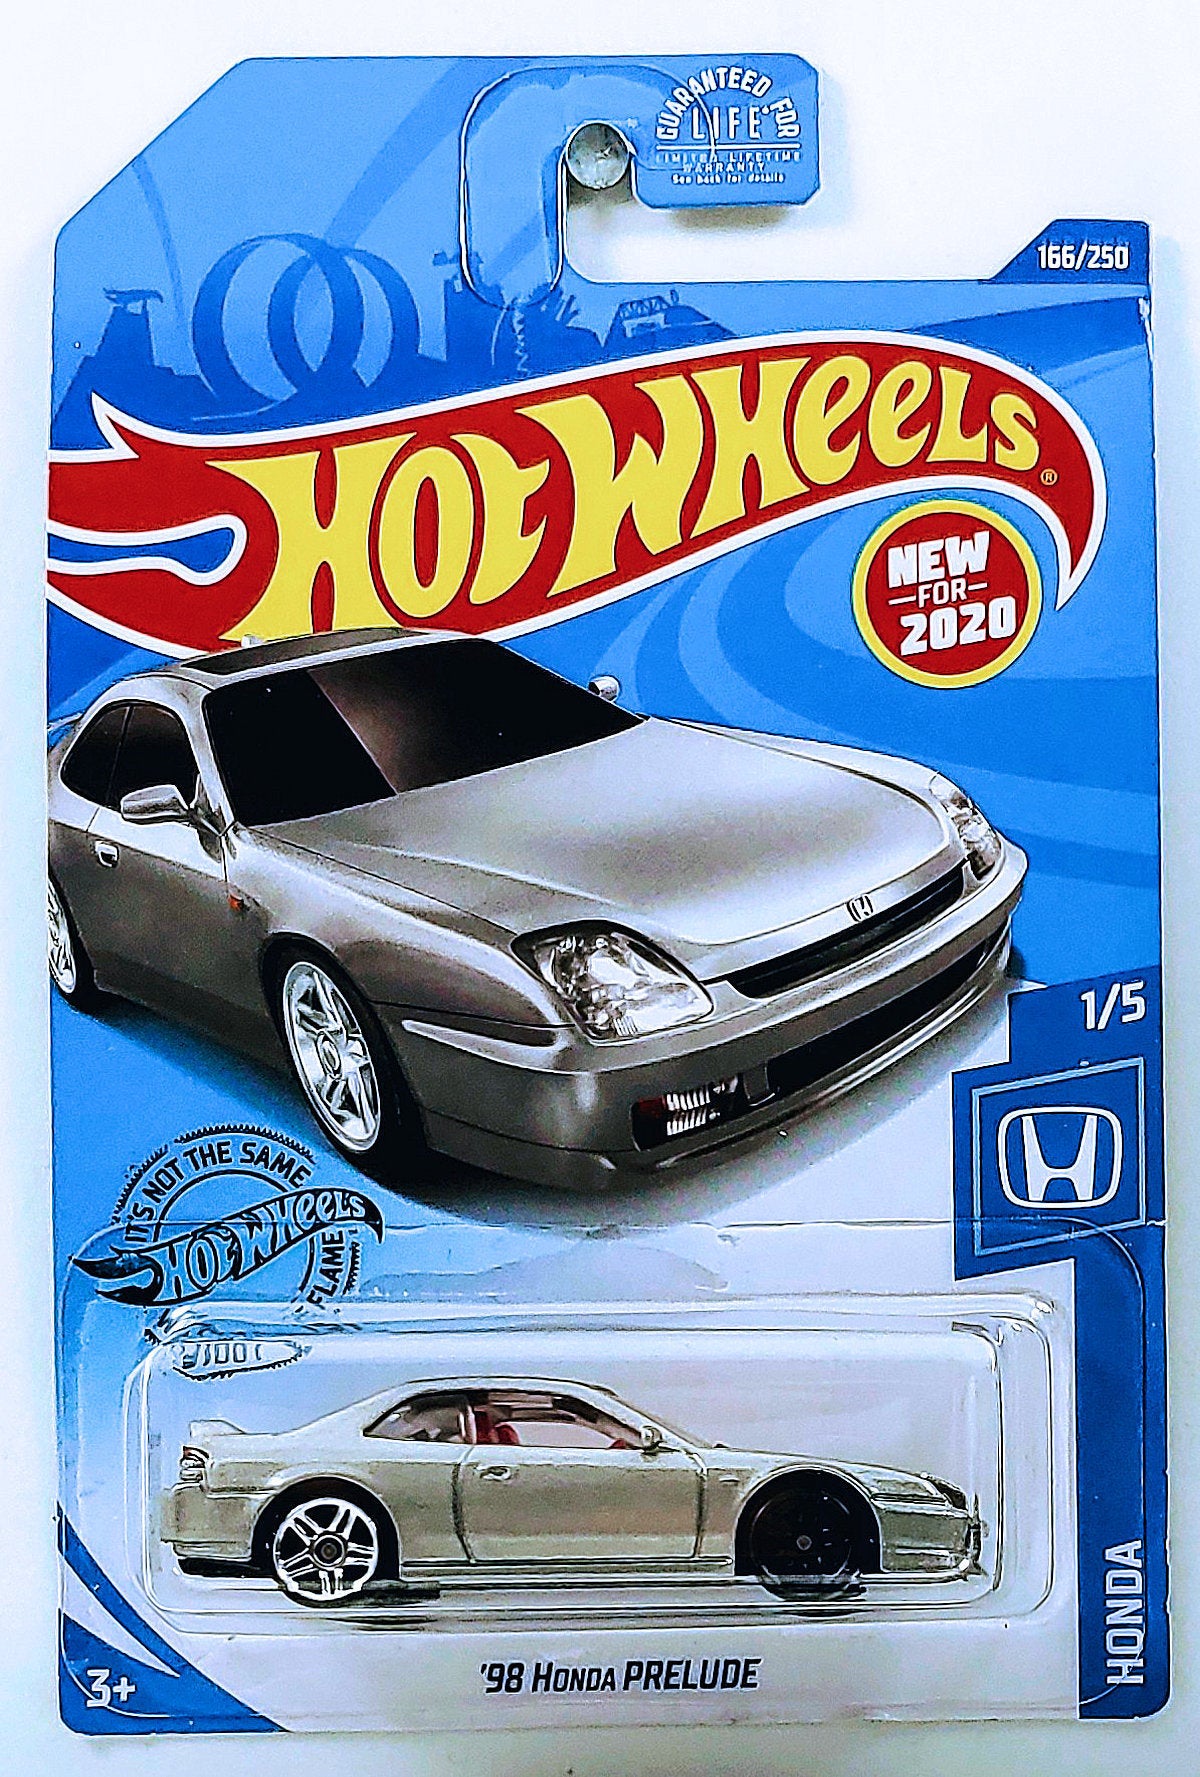 Hot Wheels 2020 - Collector # 166/250 - Honda 1/5 - New Models - '98 Honda Prelude - Silver - ERROR